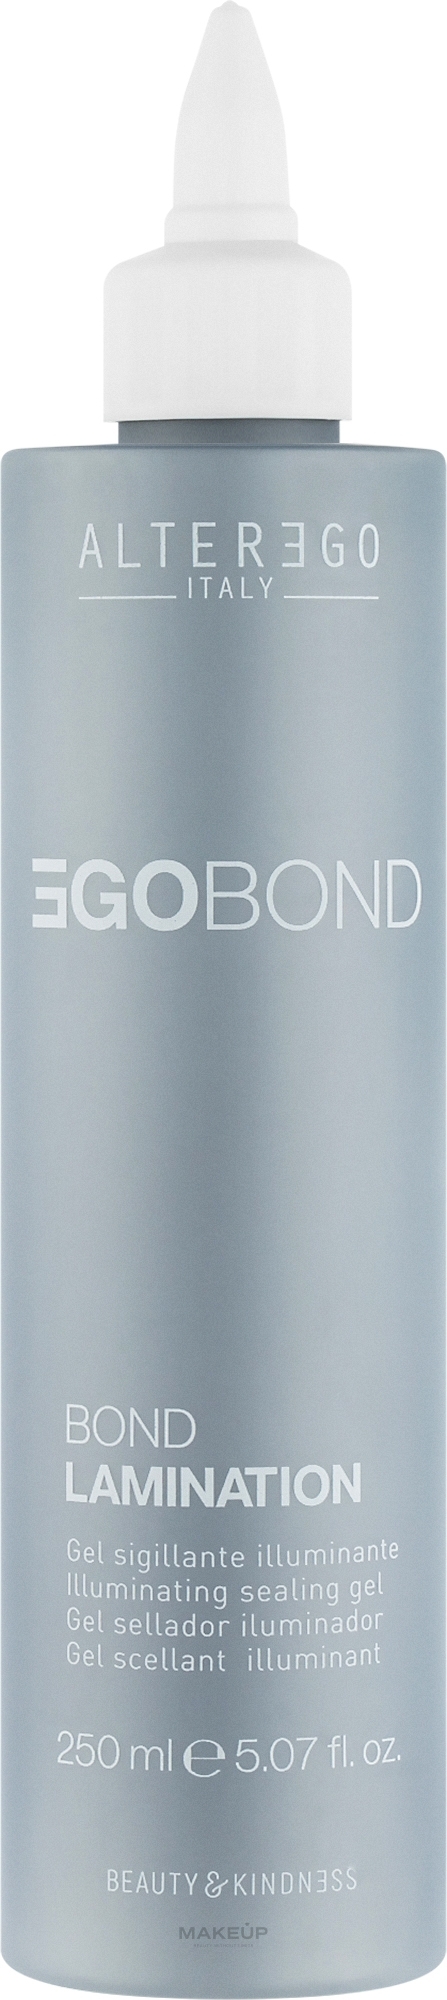 Гель для ламінування і блиску волосся - Alter Ego Egobond Bond Lamination — фото 250ml